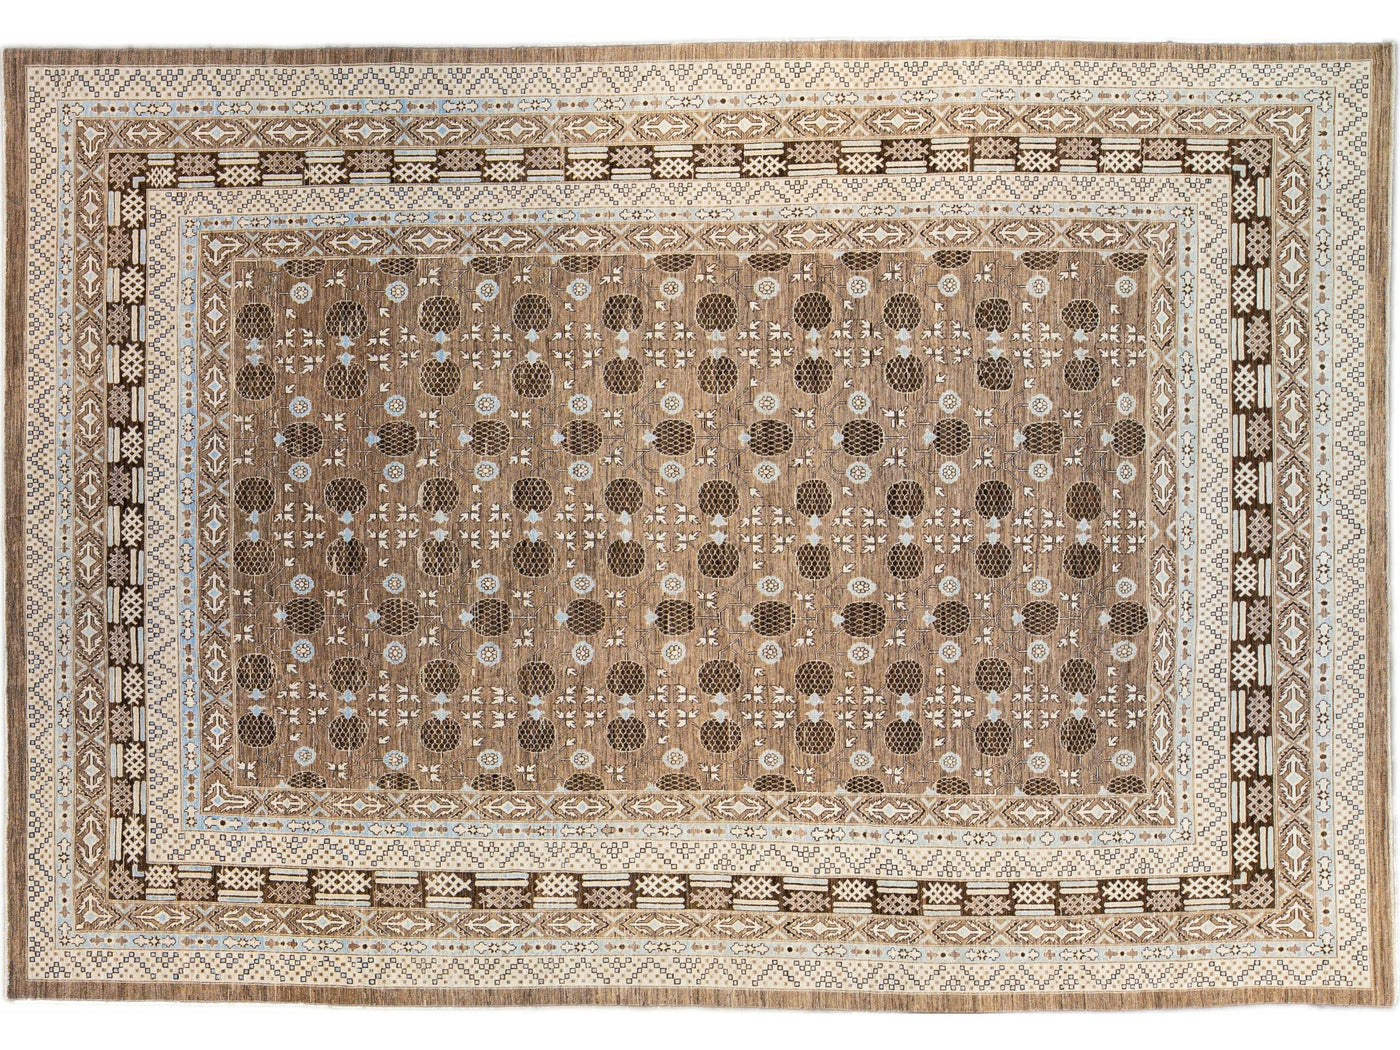 Modern Khotan Style Handmade Geometric Brown Oversize Wool Area Rug